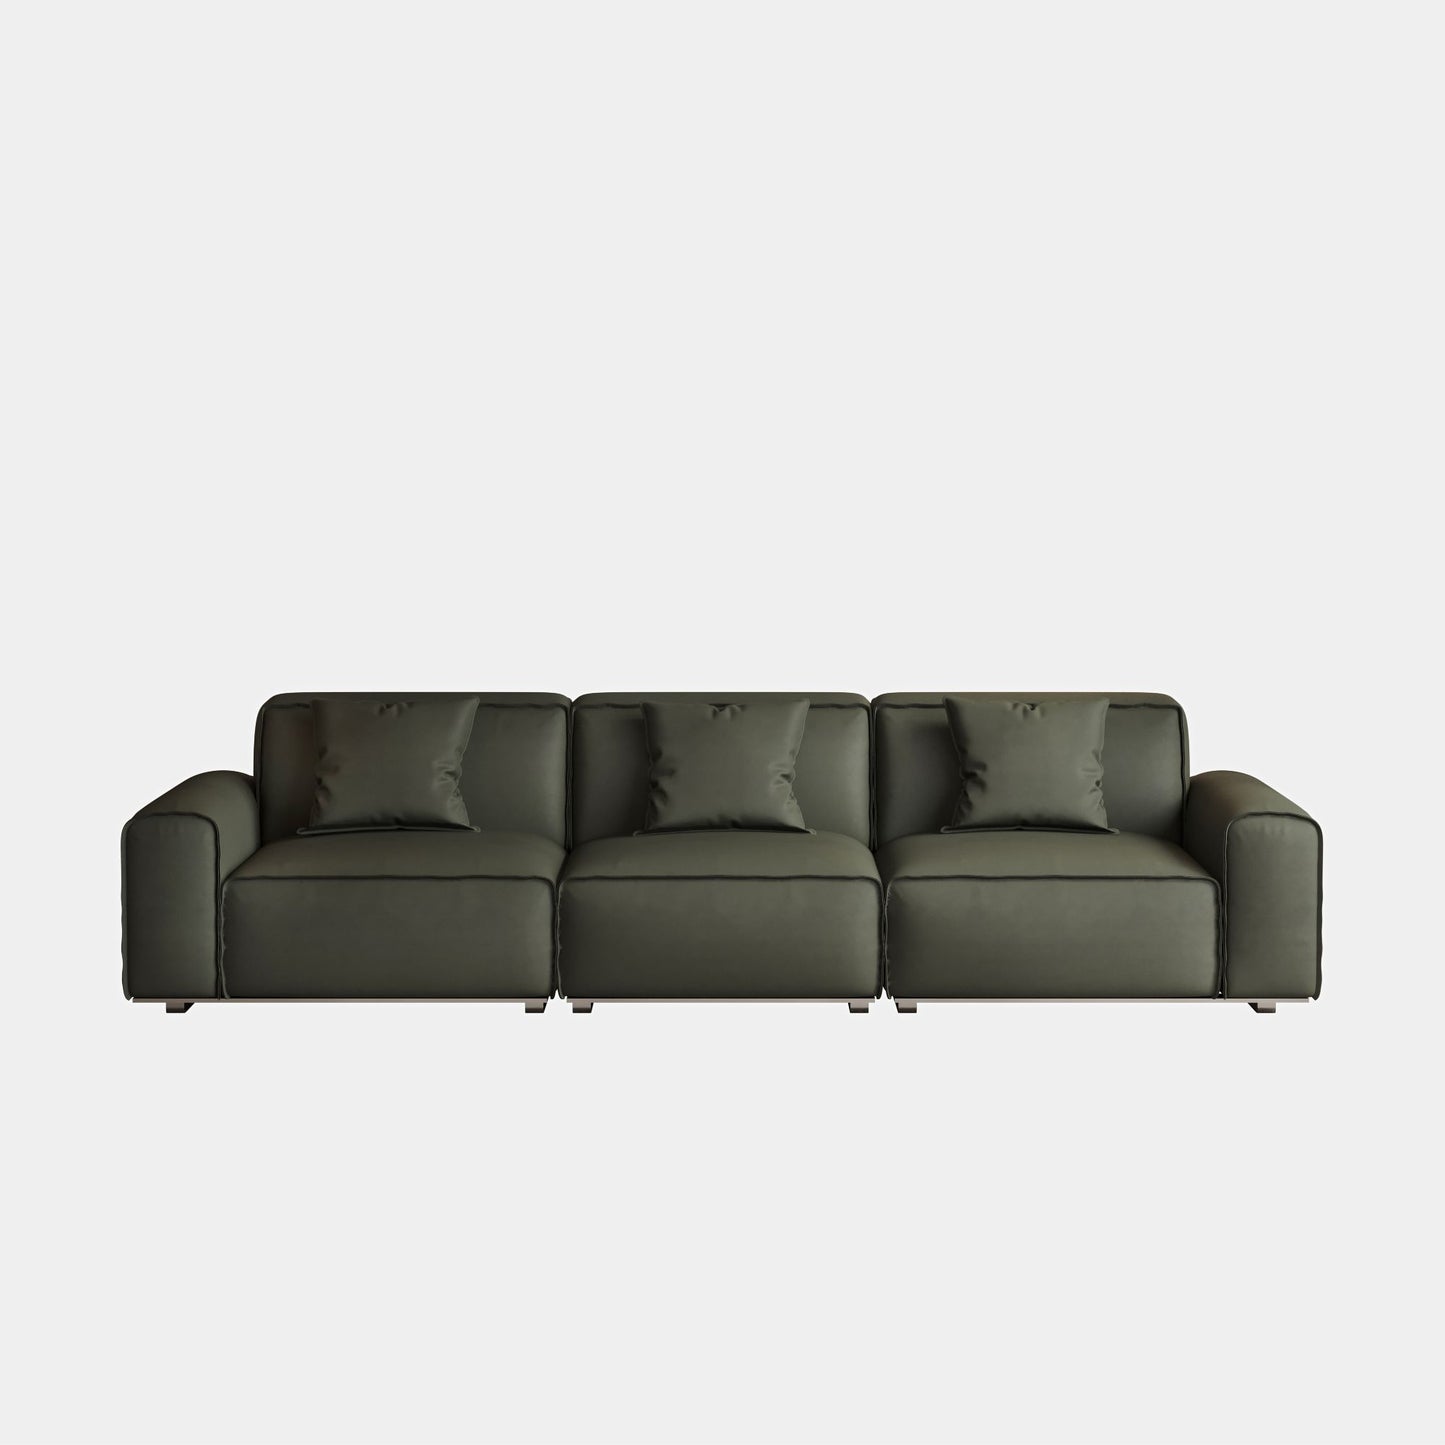 Colby dark green top grain half leather 3 seat sofa